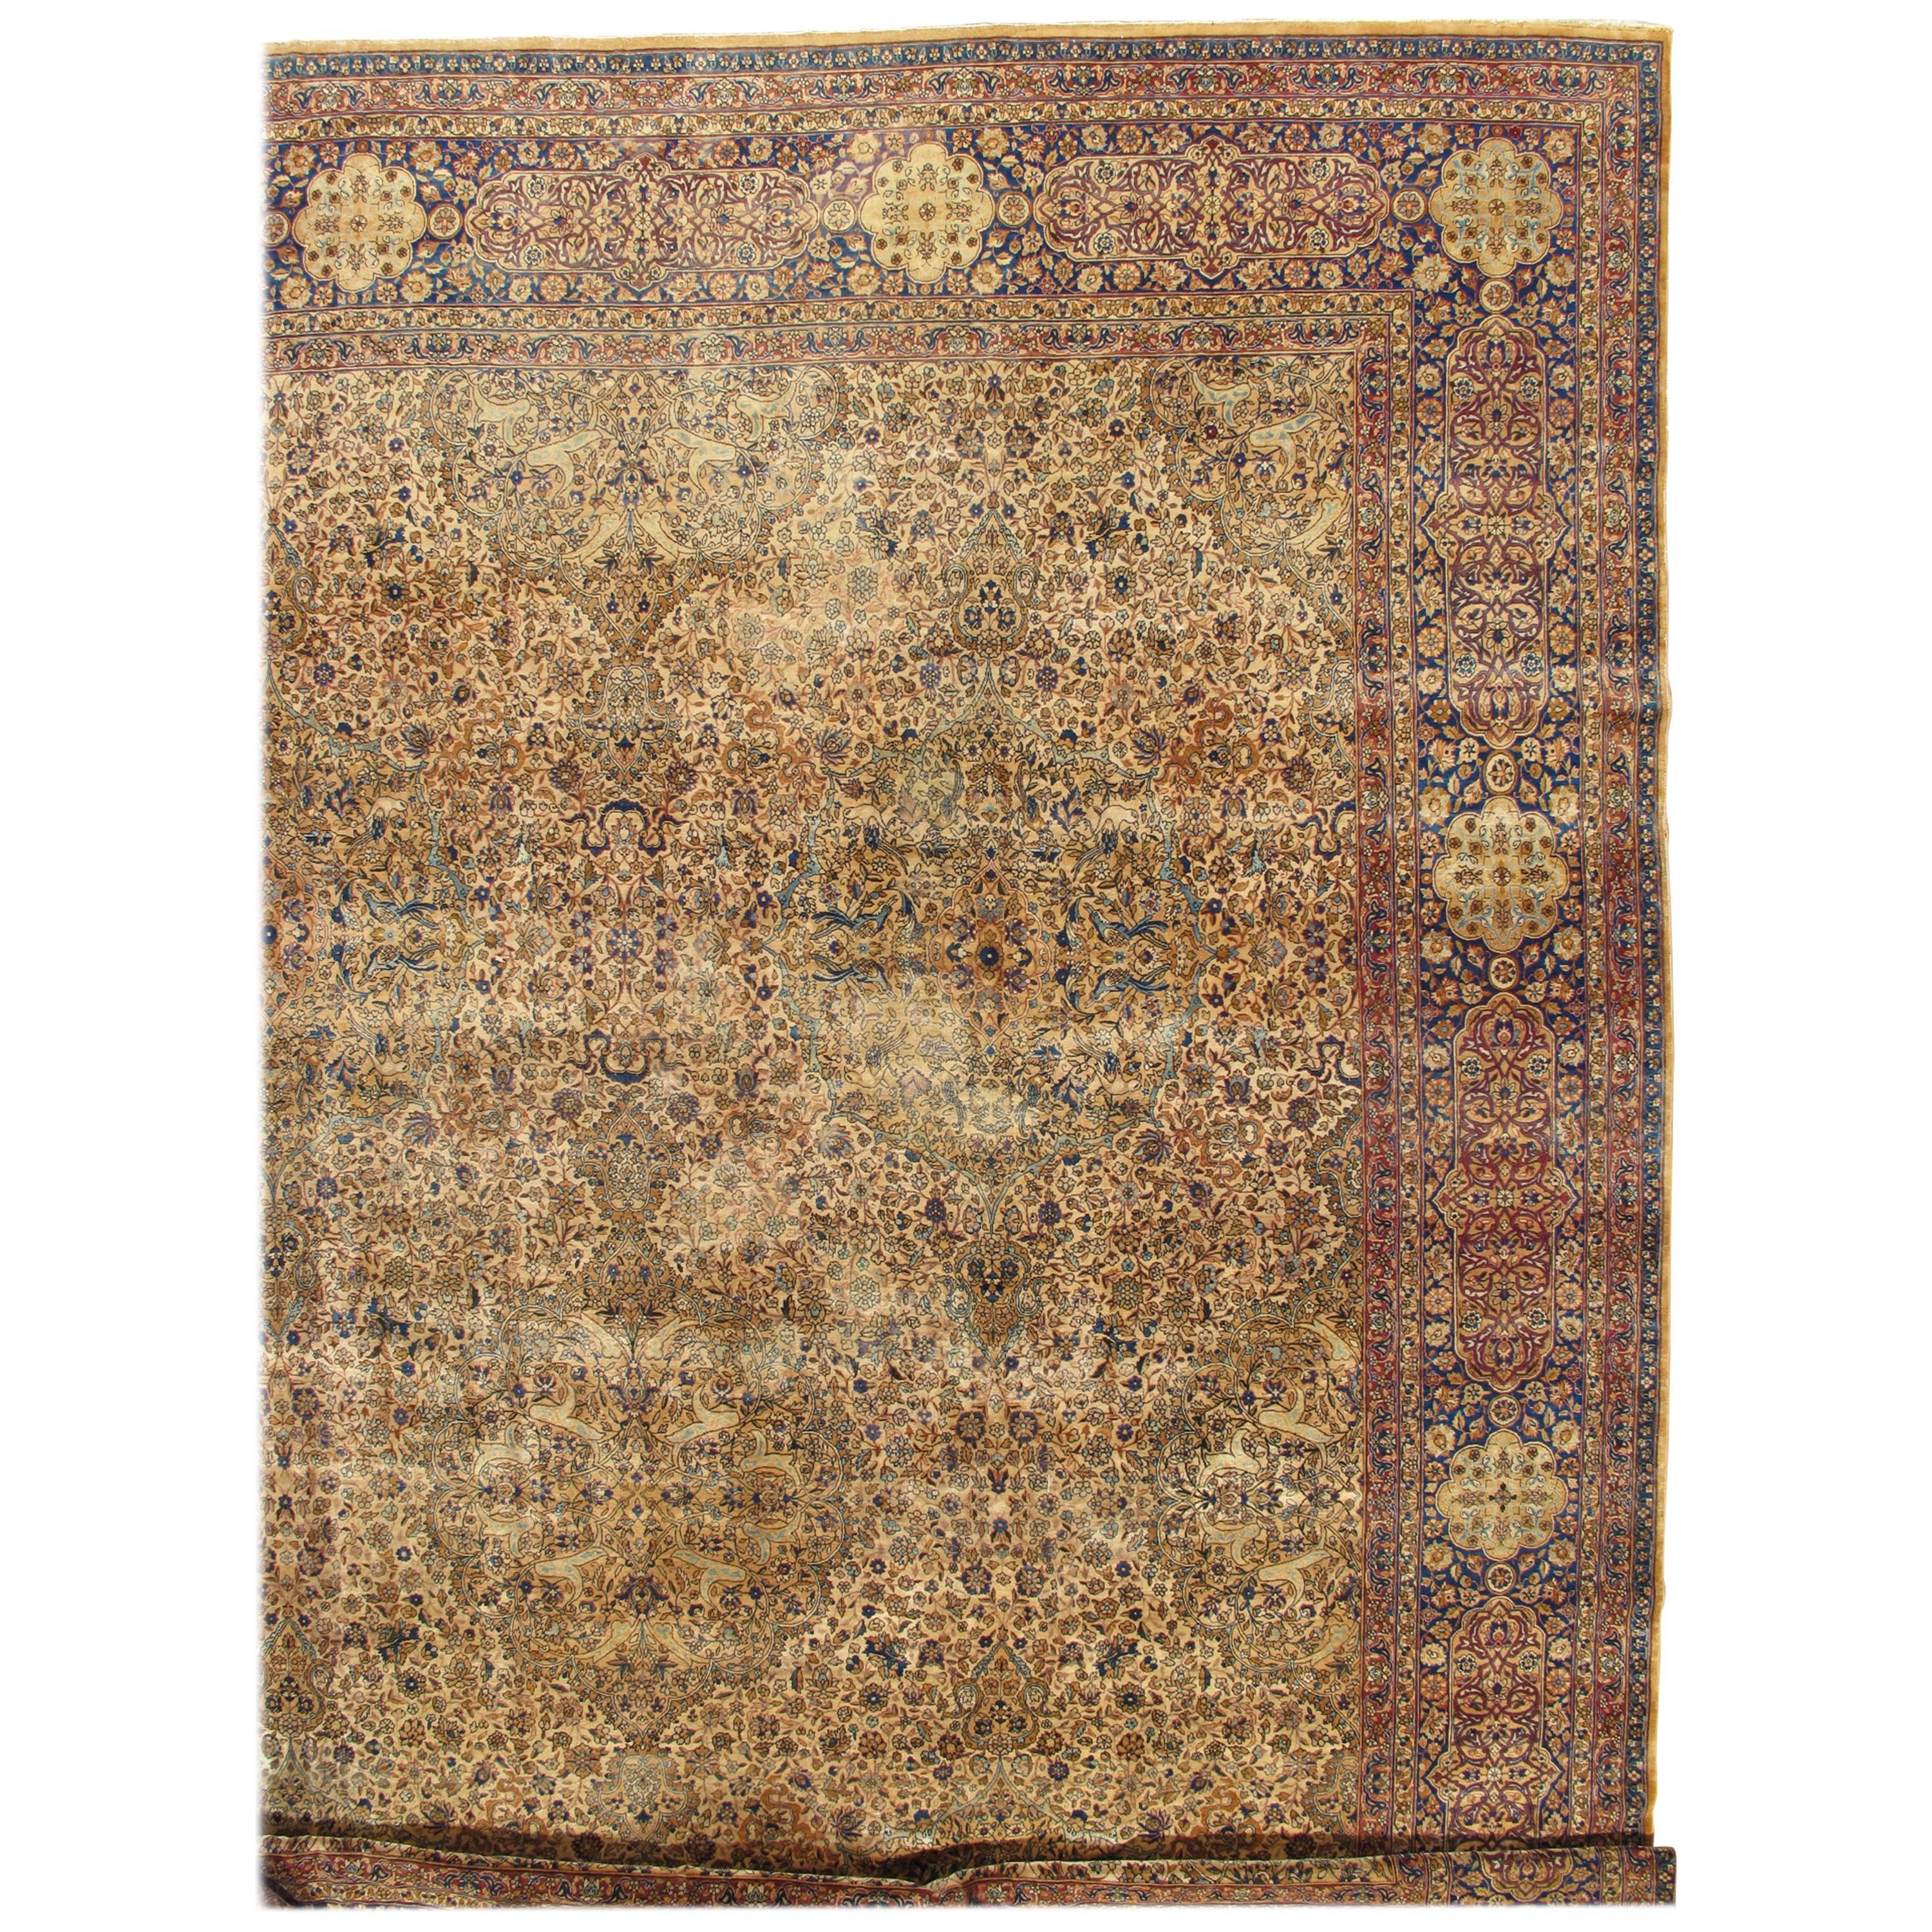 Antique Persian Kerman Carpet, Oriental Rug, Handmade, Ivory, Gold, Blue, Soft